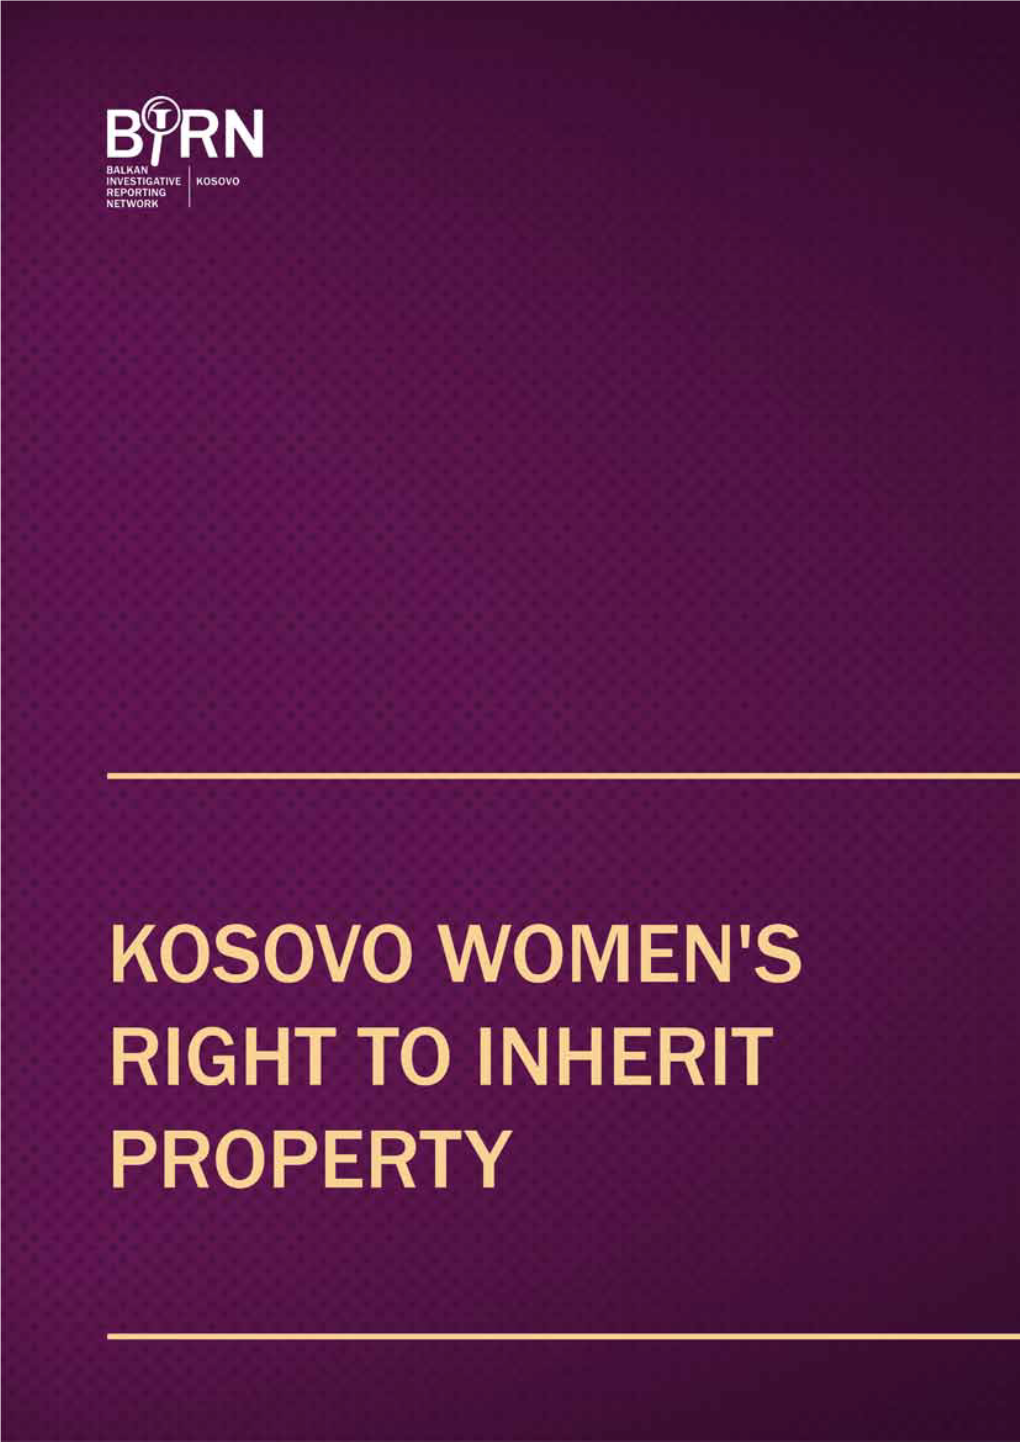 Kosovo Women's Right to Inherit Property 22.09.2018